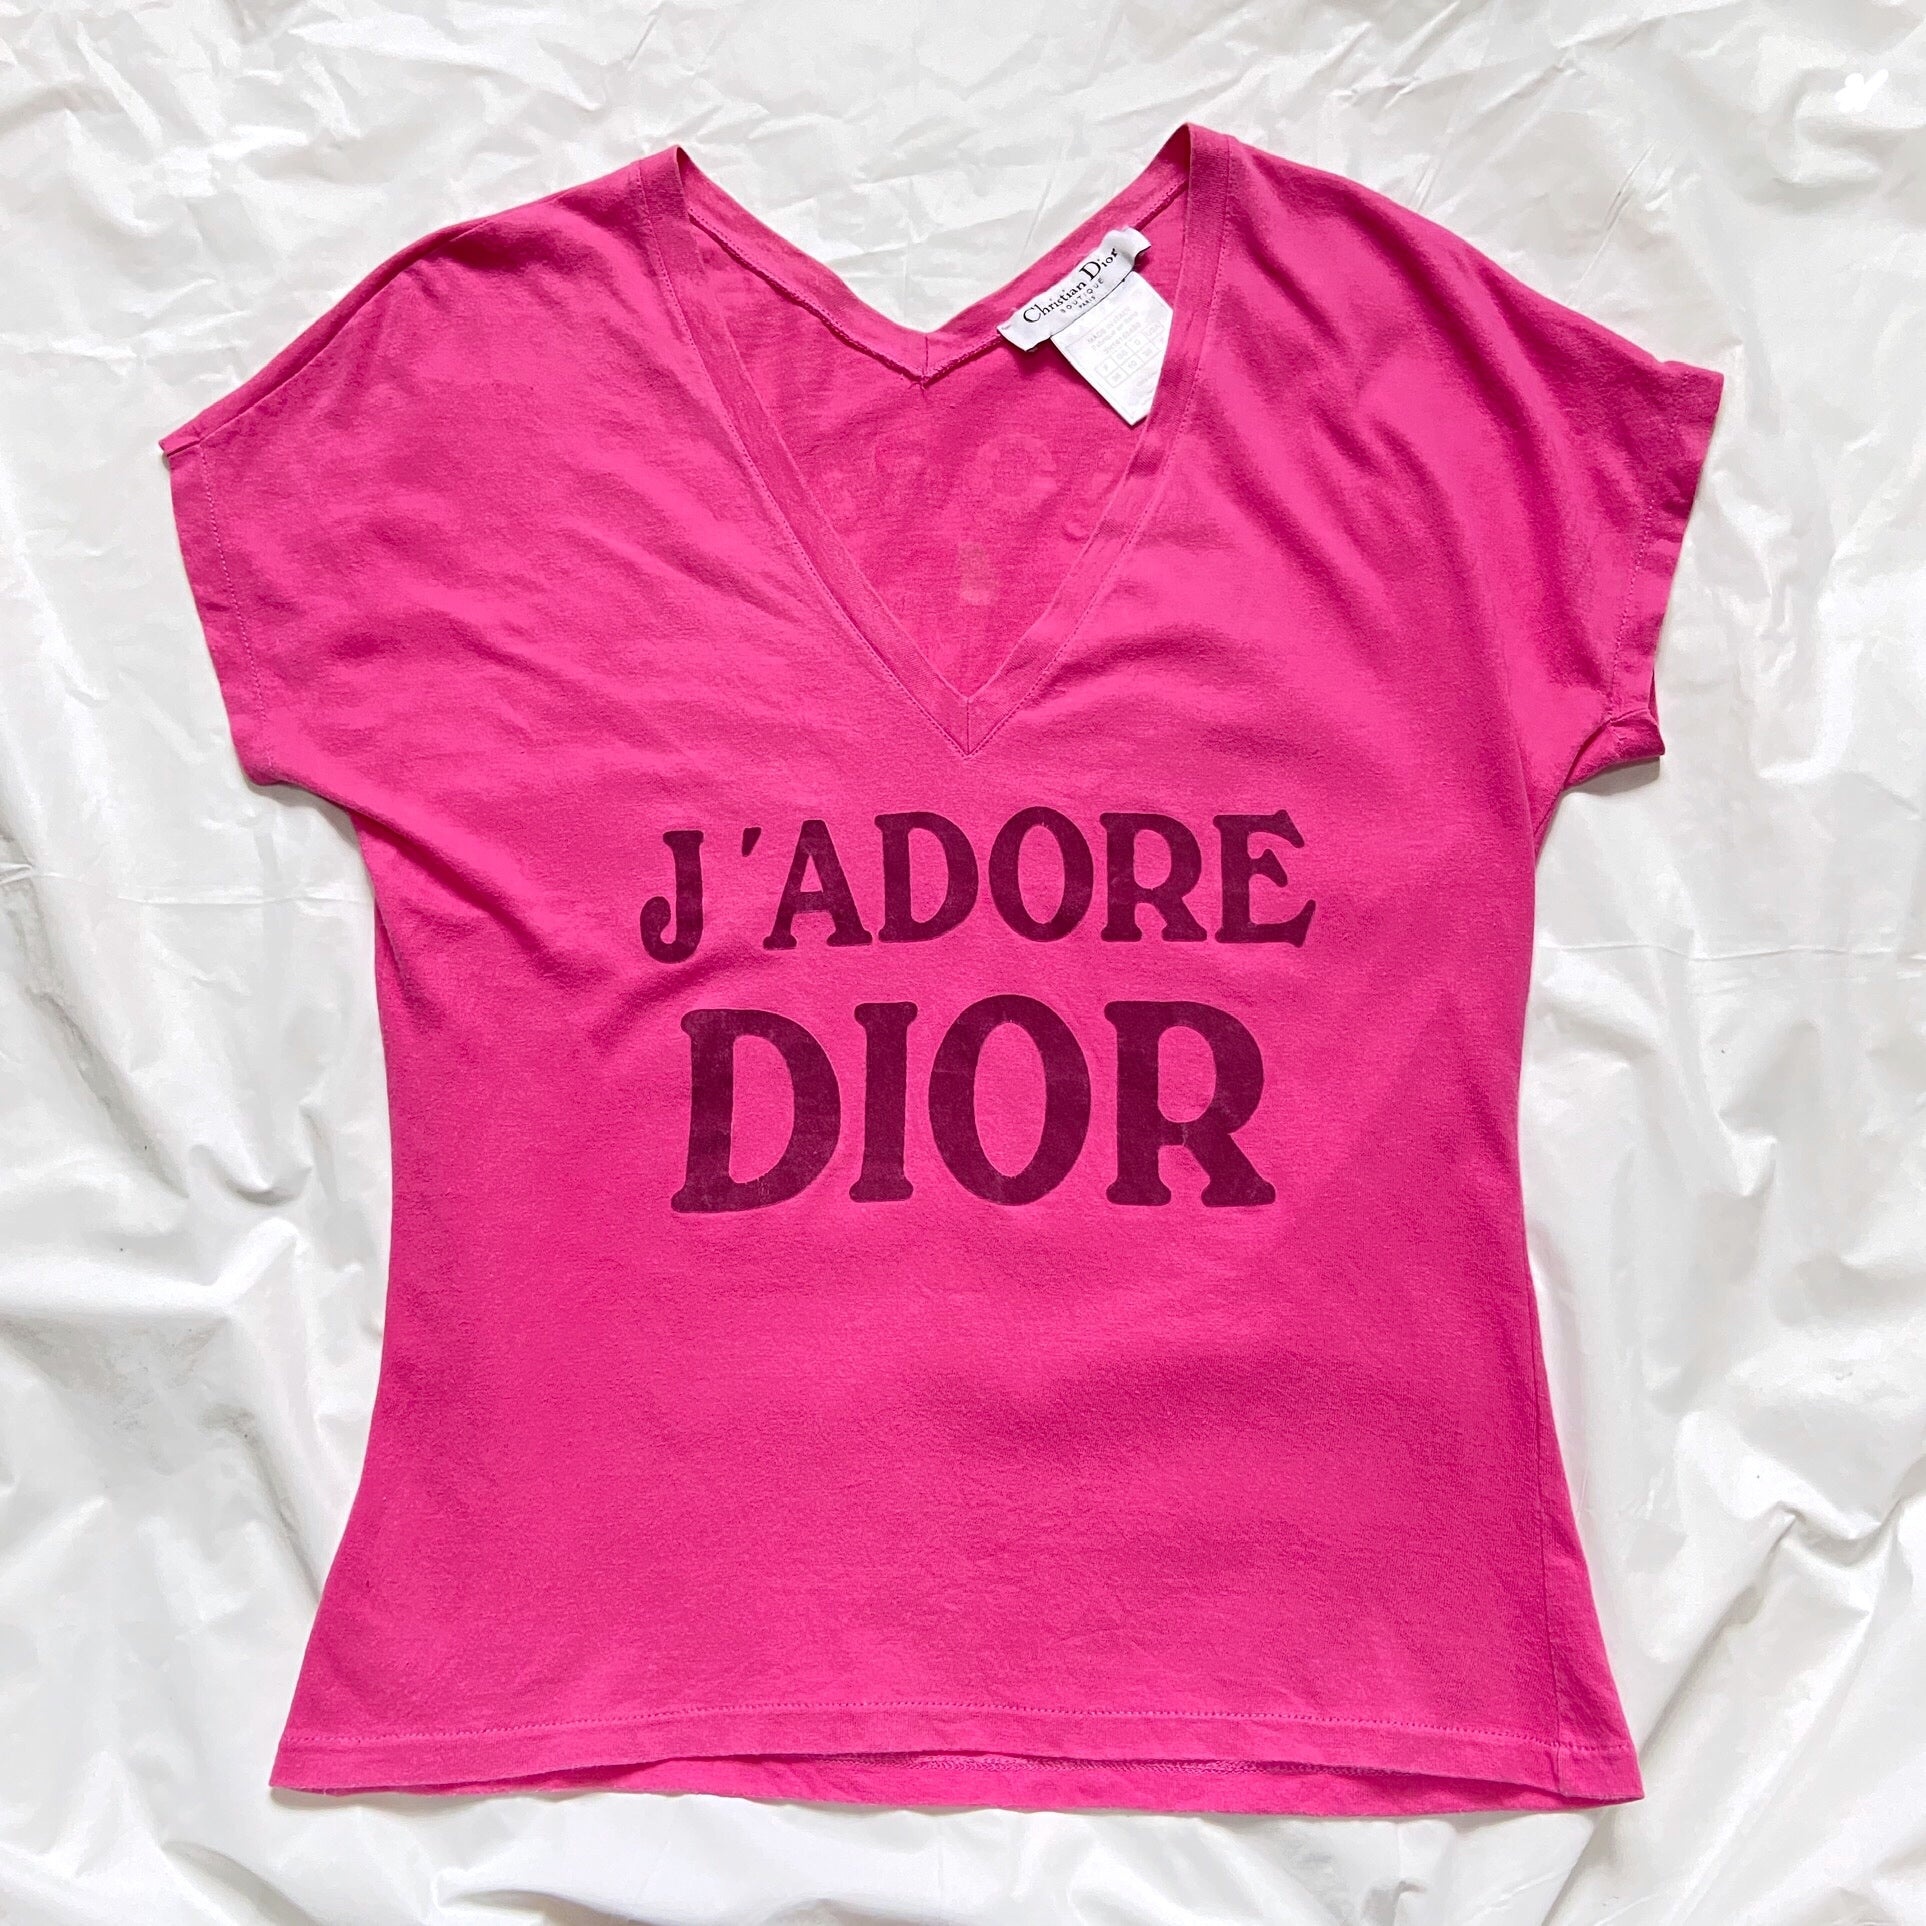 Christian Dior Fall 2003 Galliano “J’adore Dior” pink low neckline tee 42